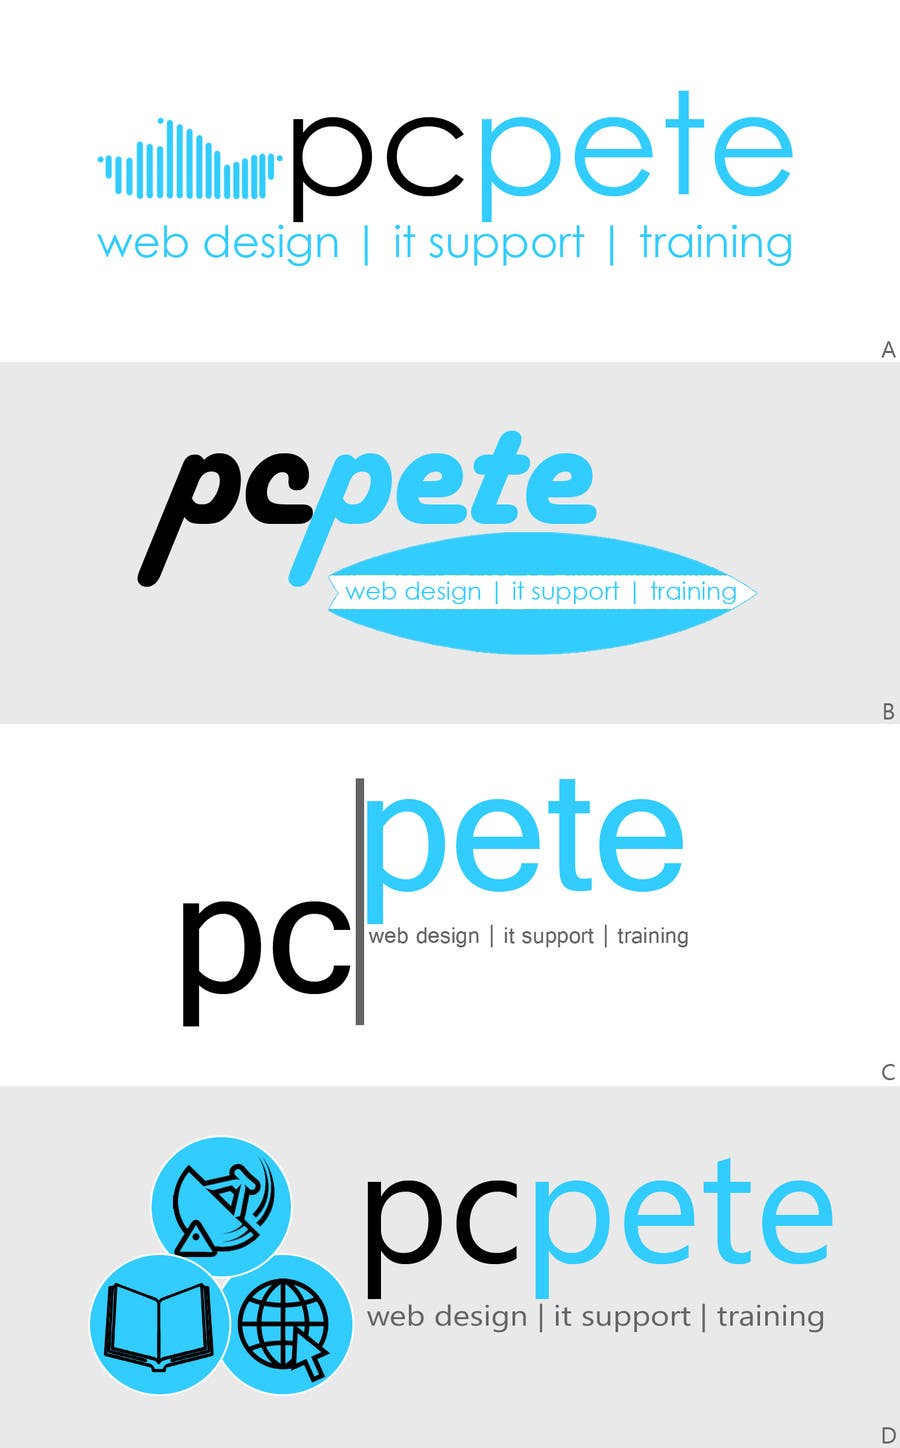 Proposition n°551 du concours                                                 pc pete - IT services company needs a new logo
                                            